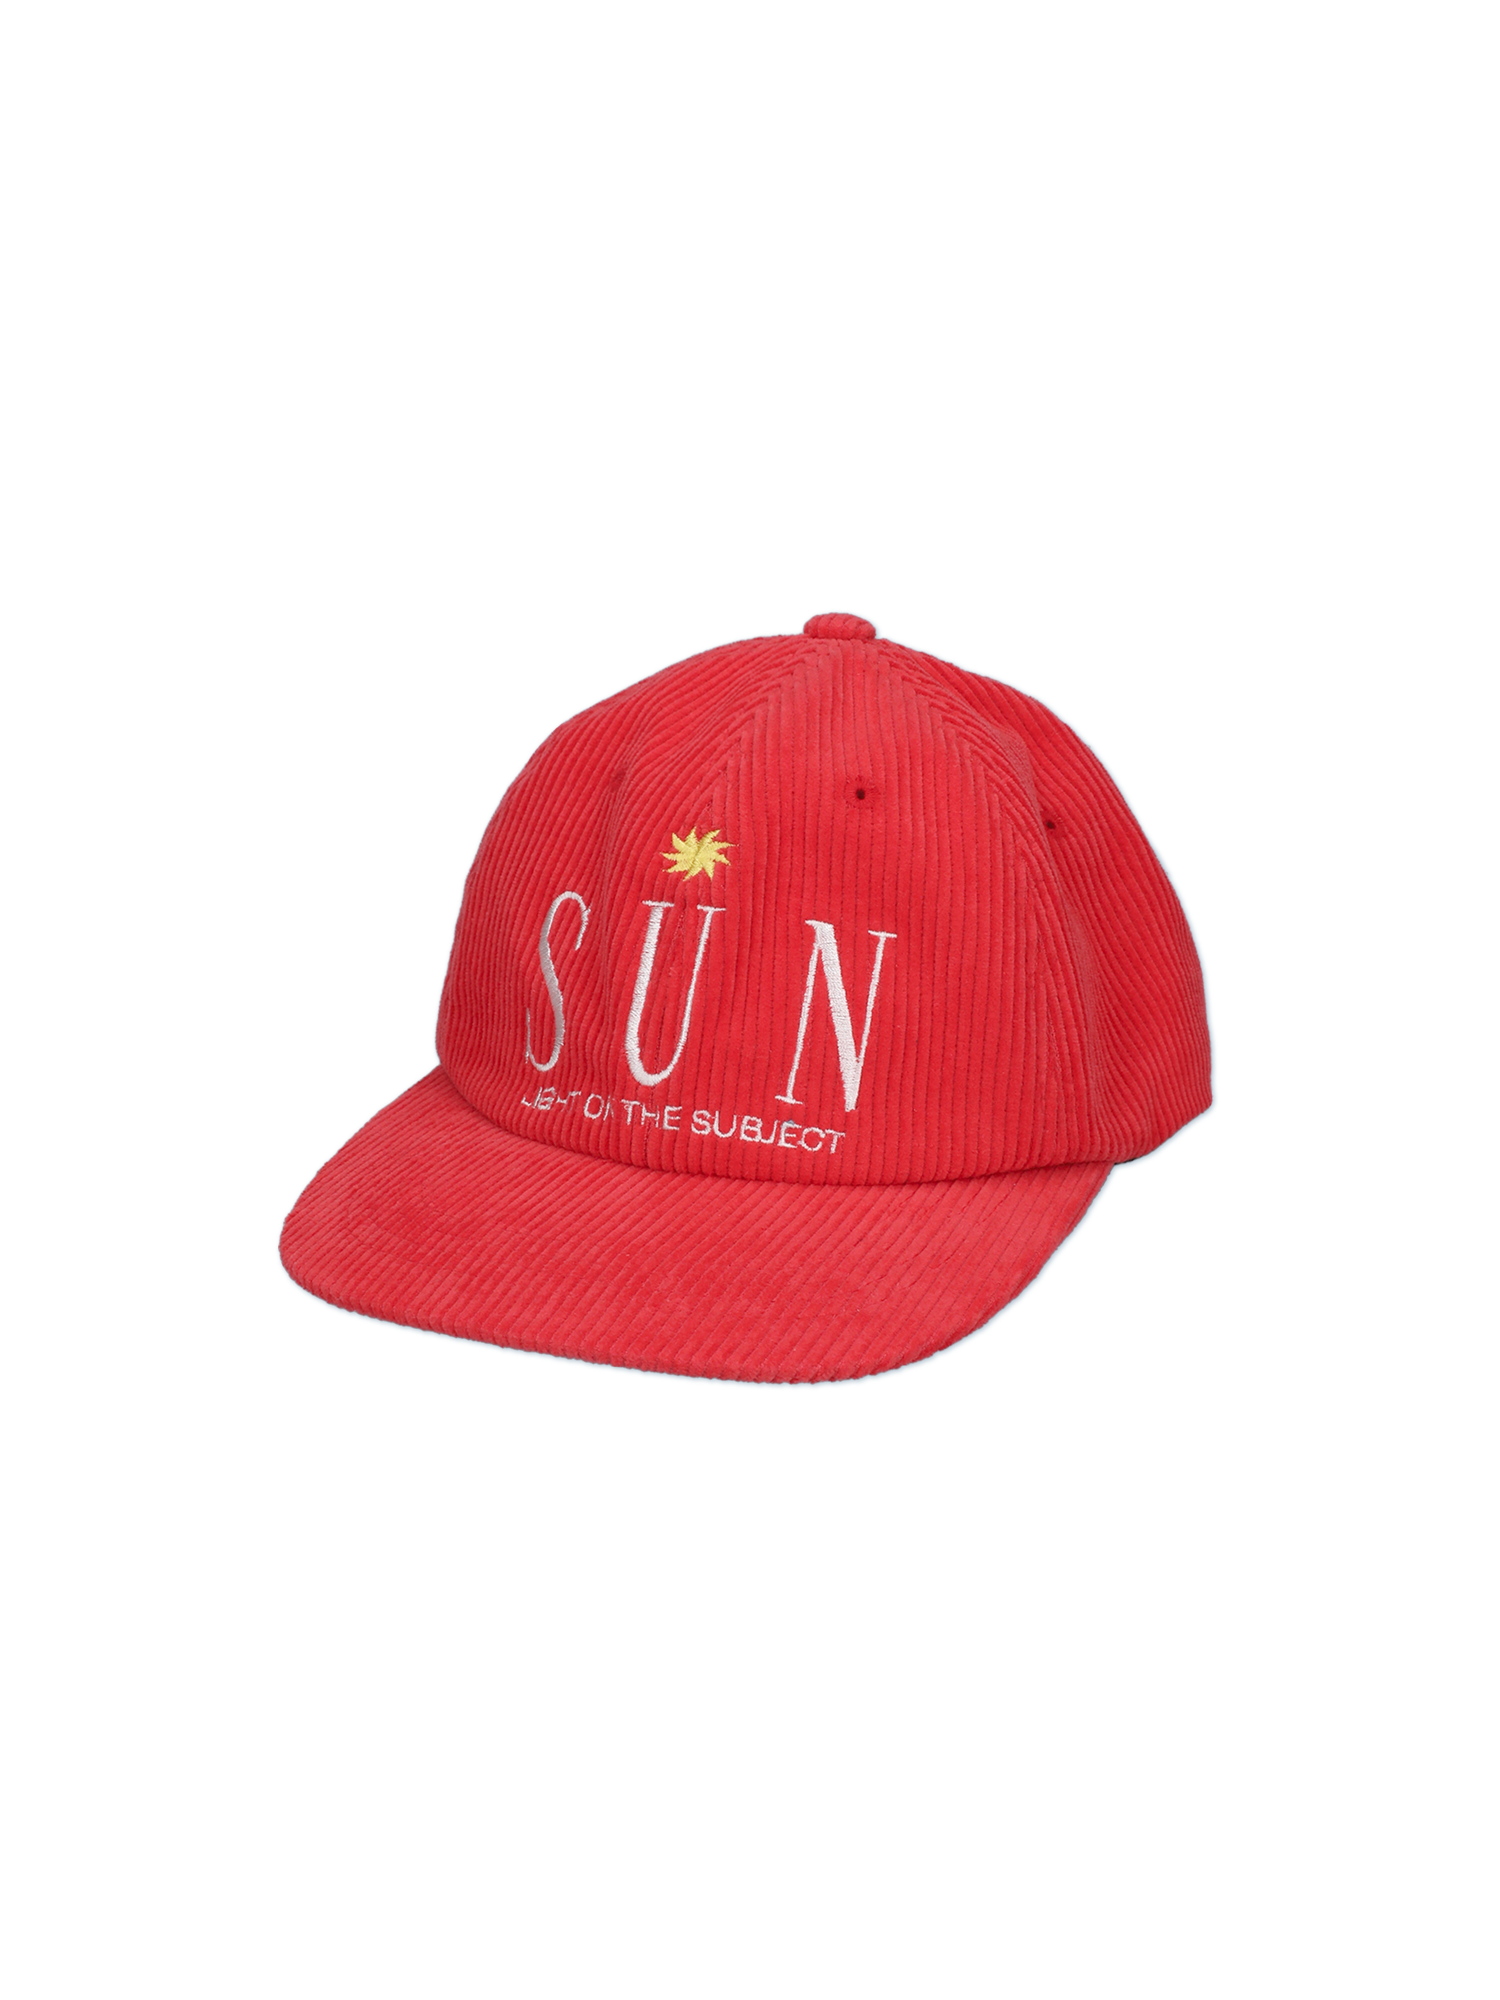 Sun Corduroy Cap - Red